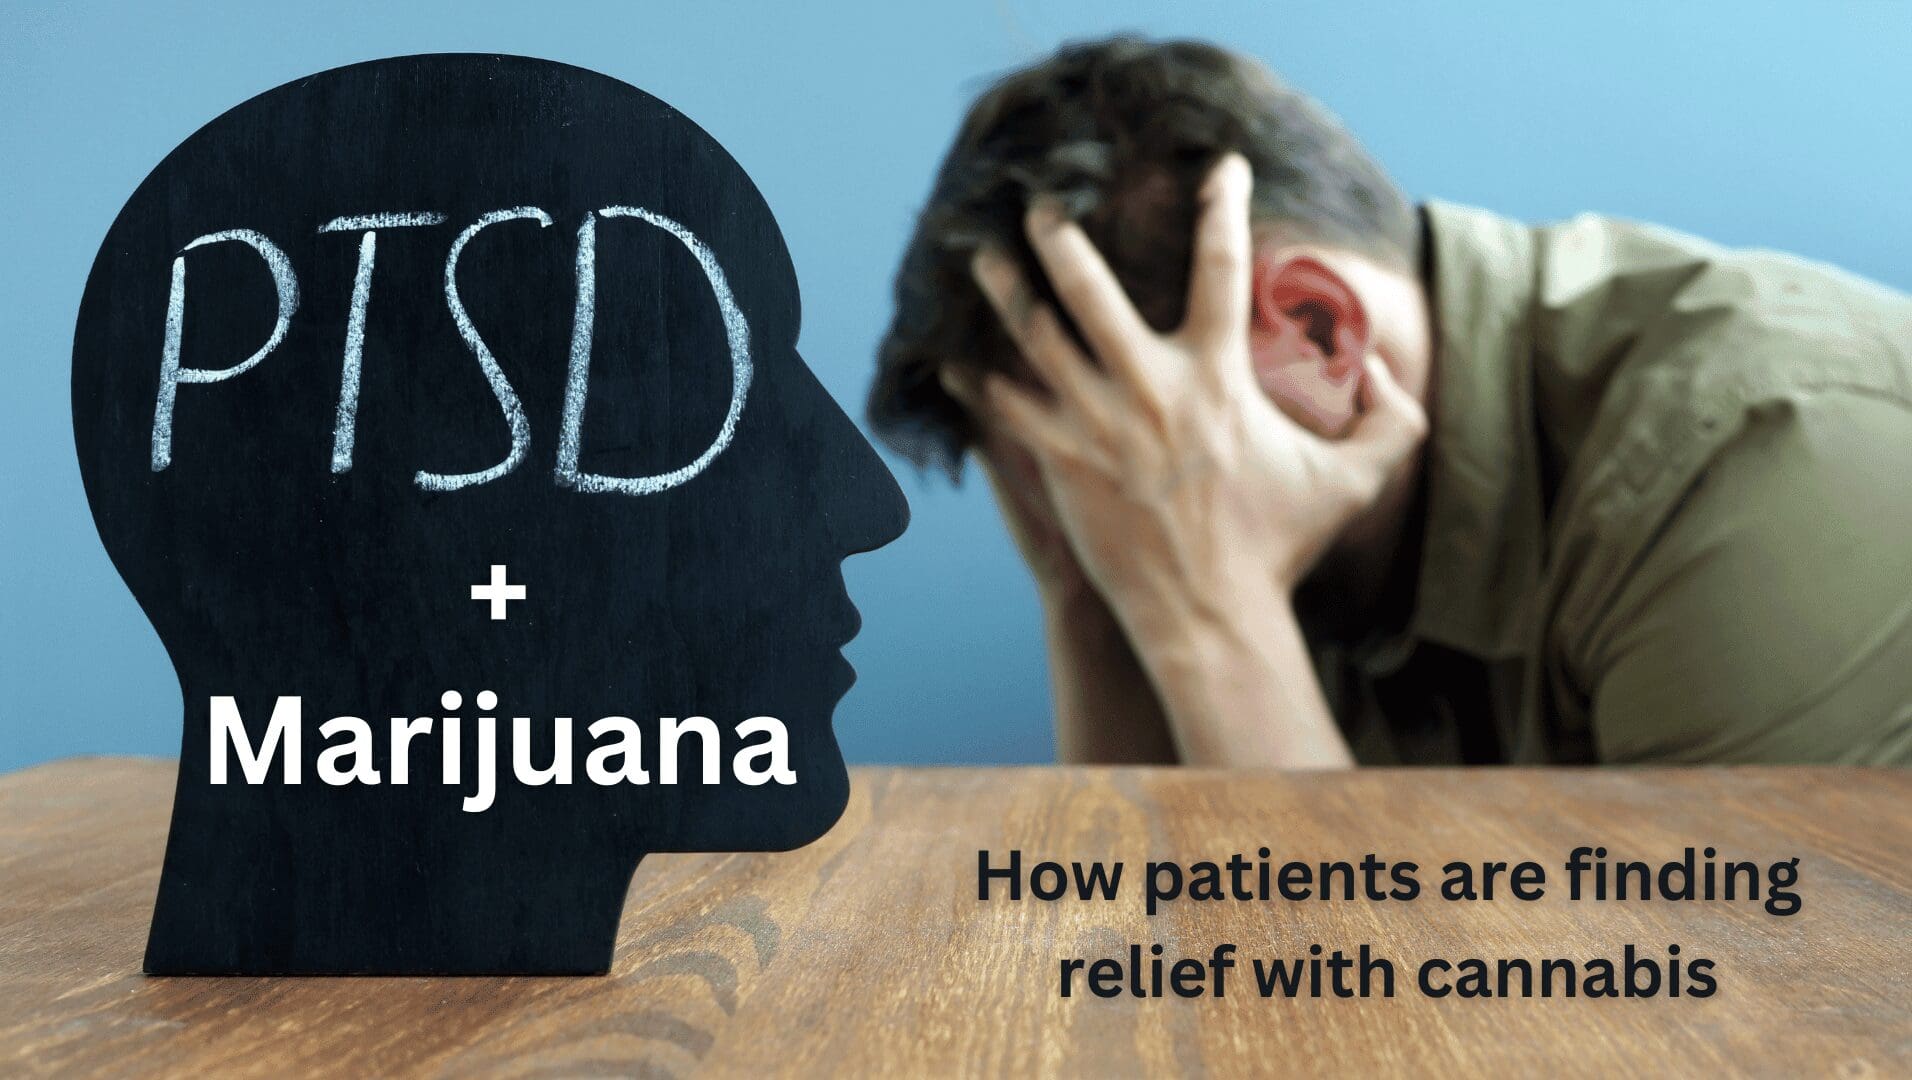 PTSD and cannabis